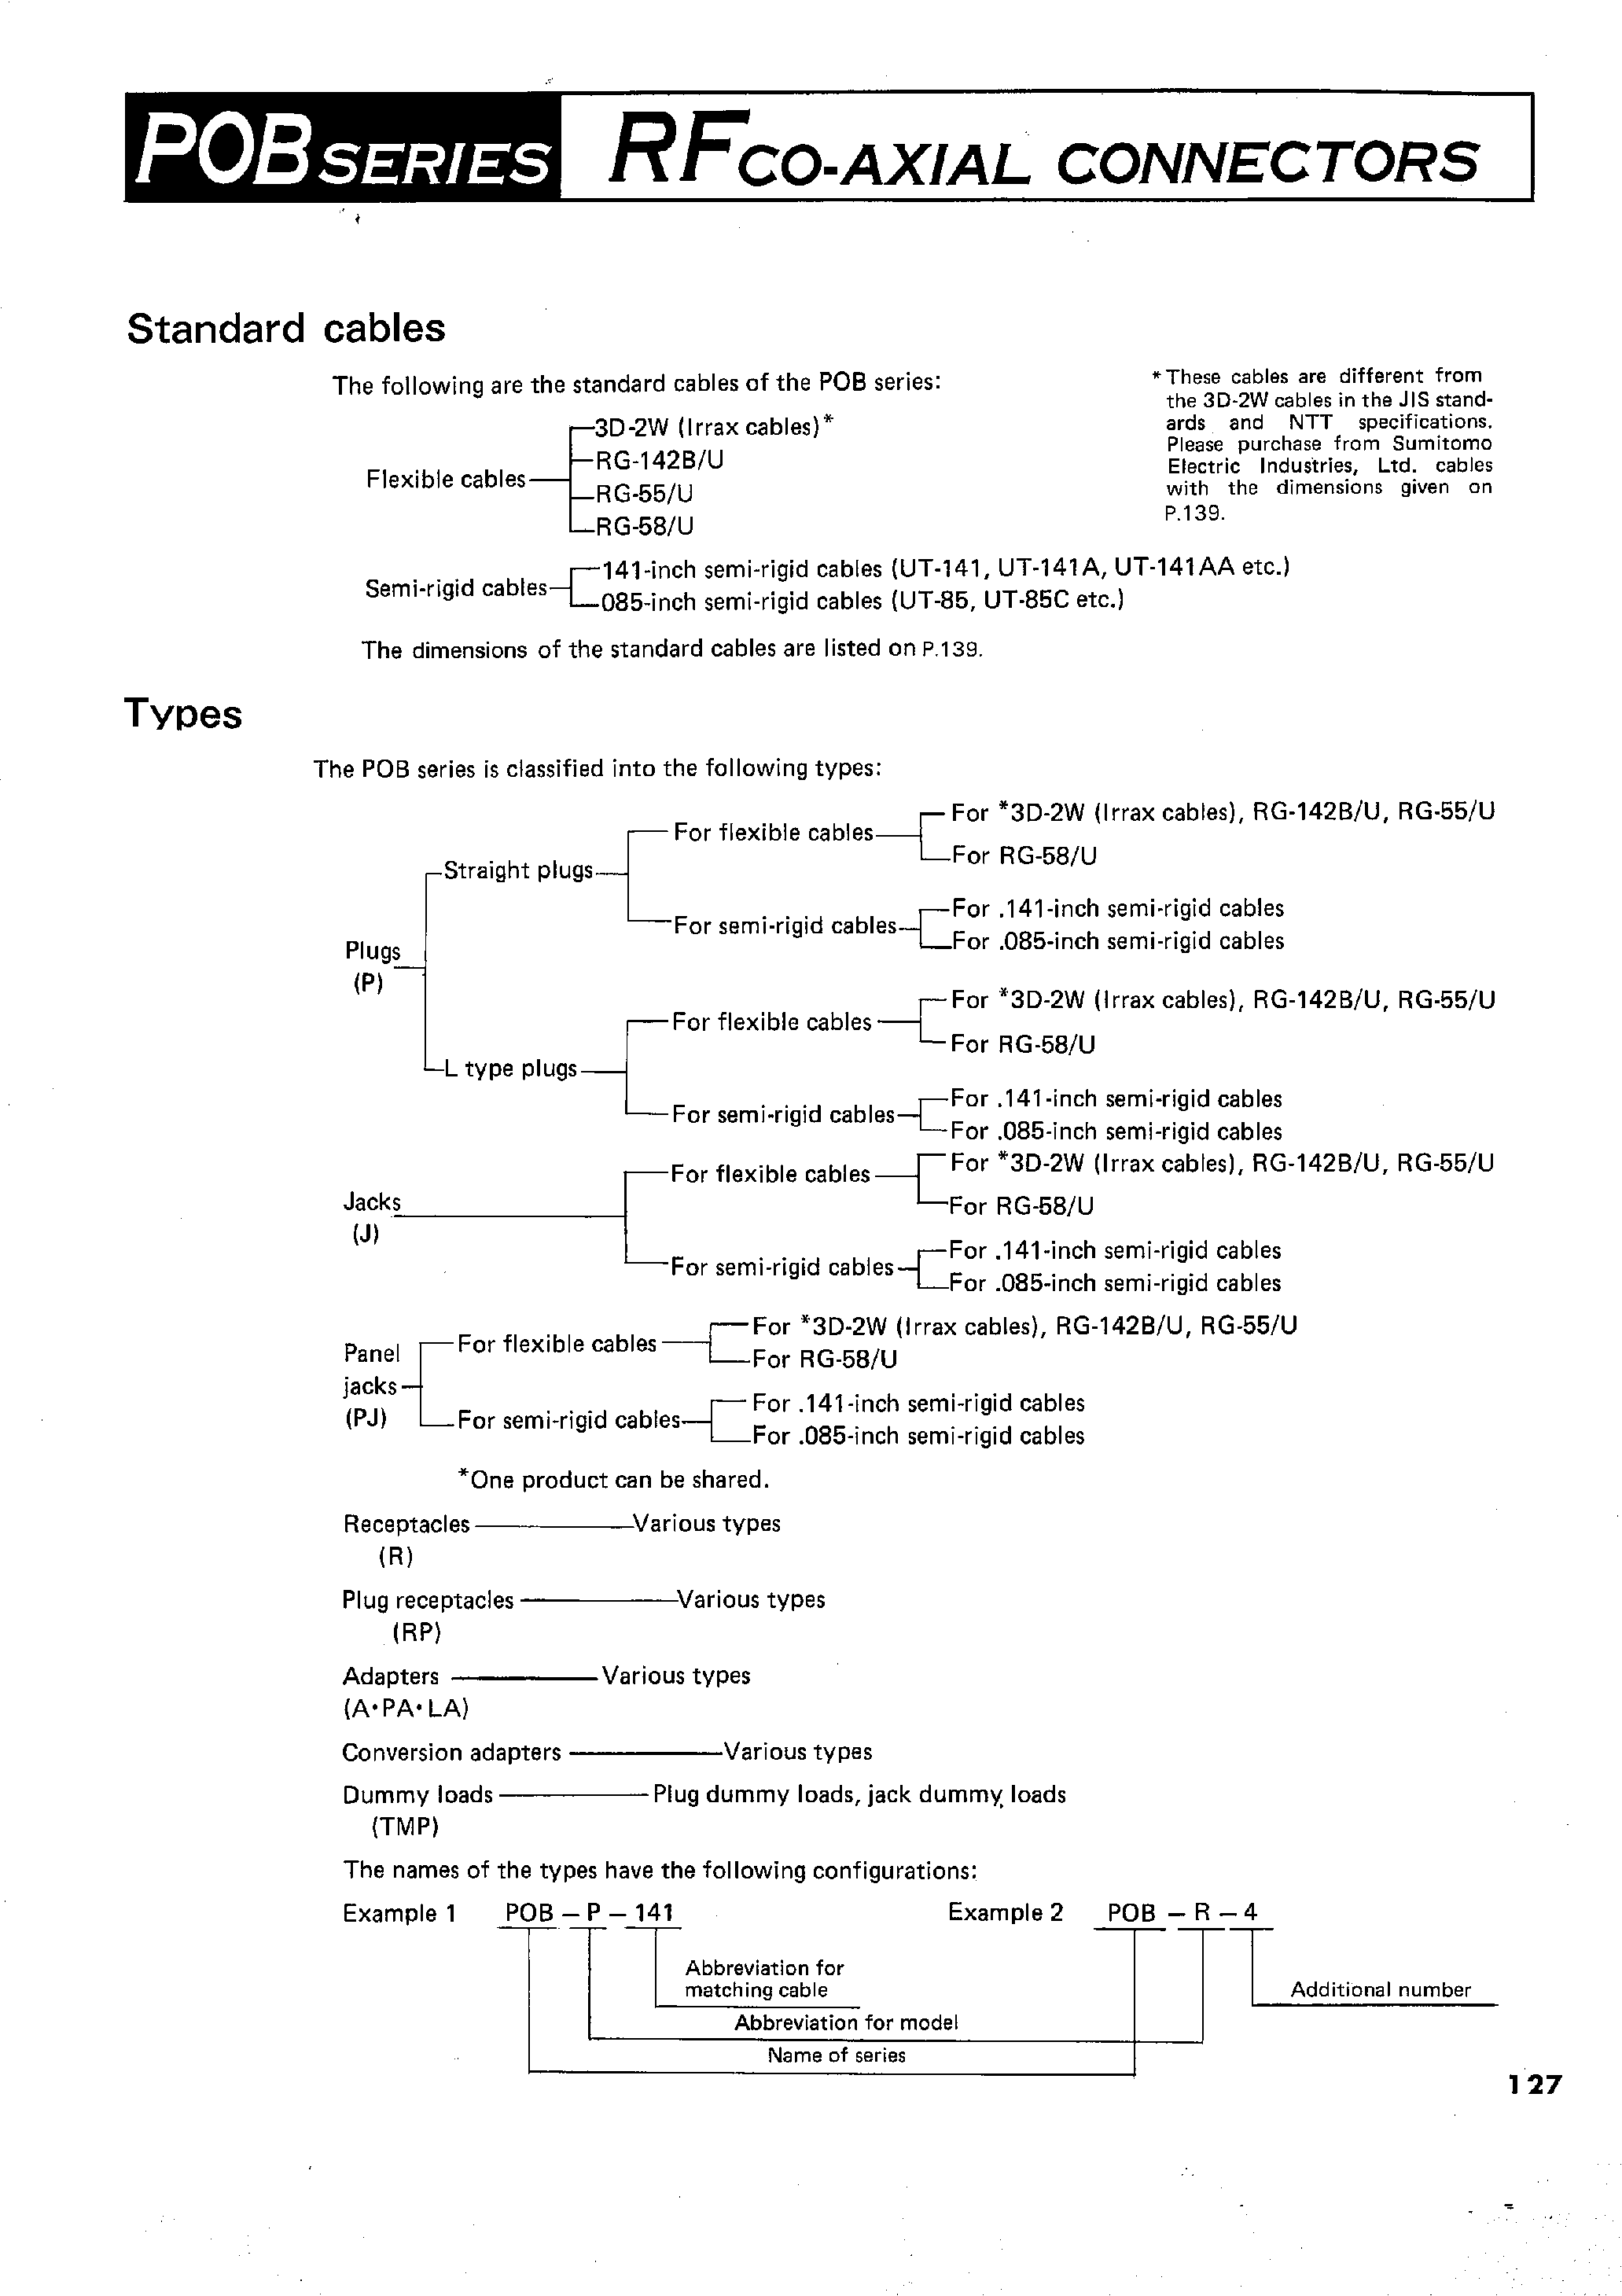 Datasheet POB-J-55/U - RFCO-AXIAL CONNECTORS page 2